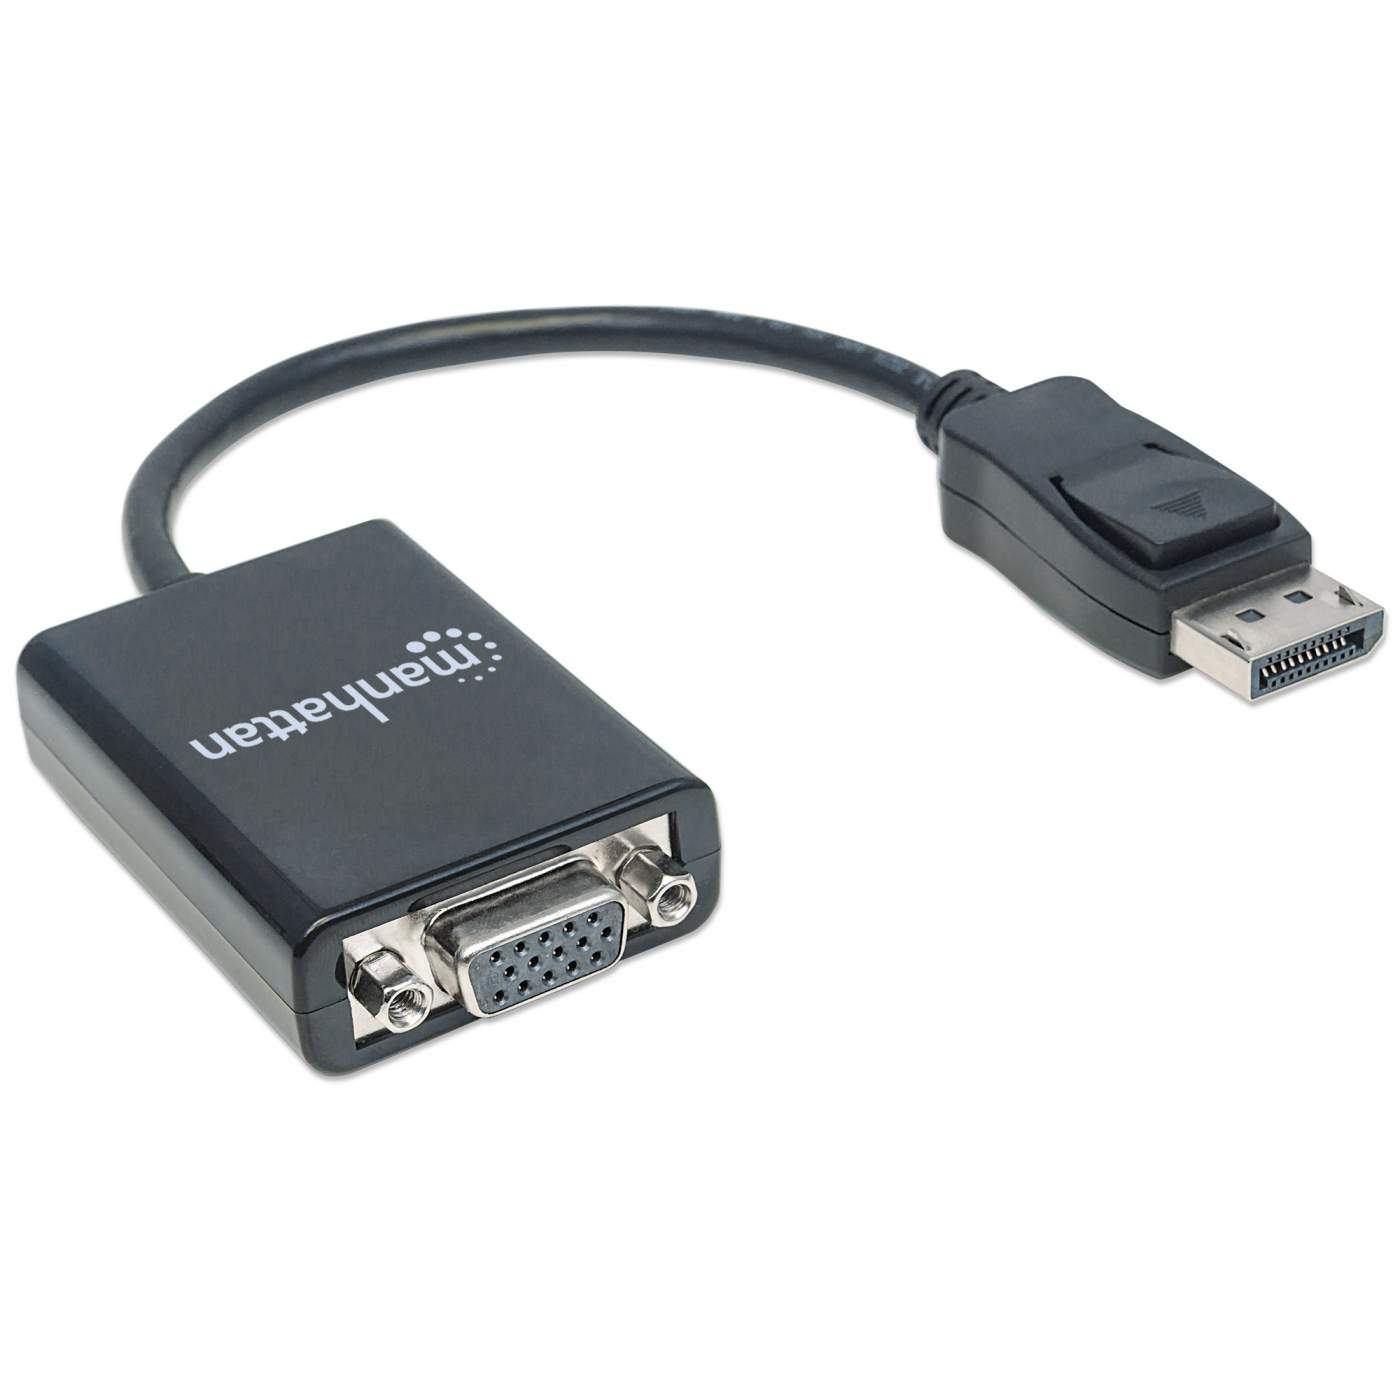 DisplayPort to VGA Converter Cable Image 3